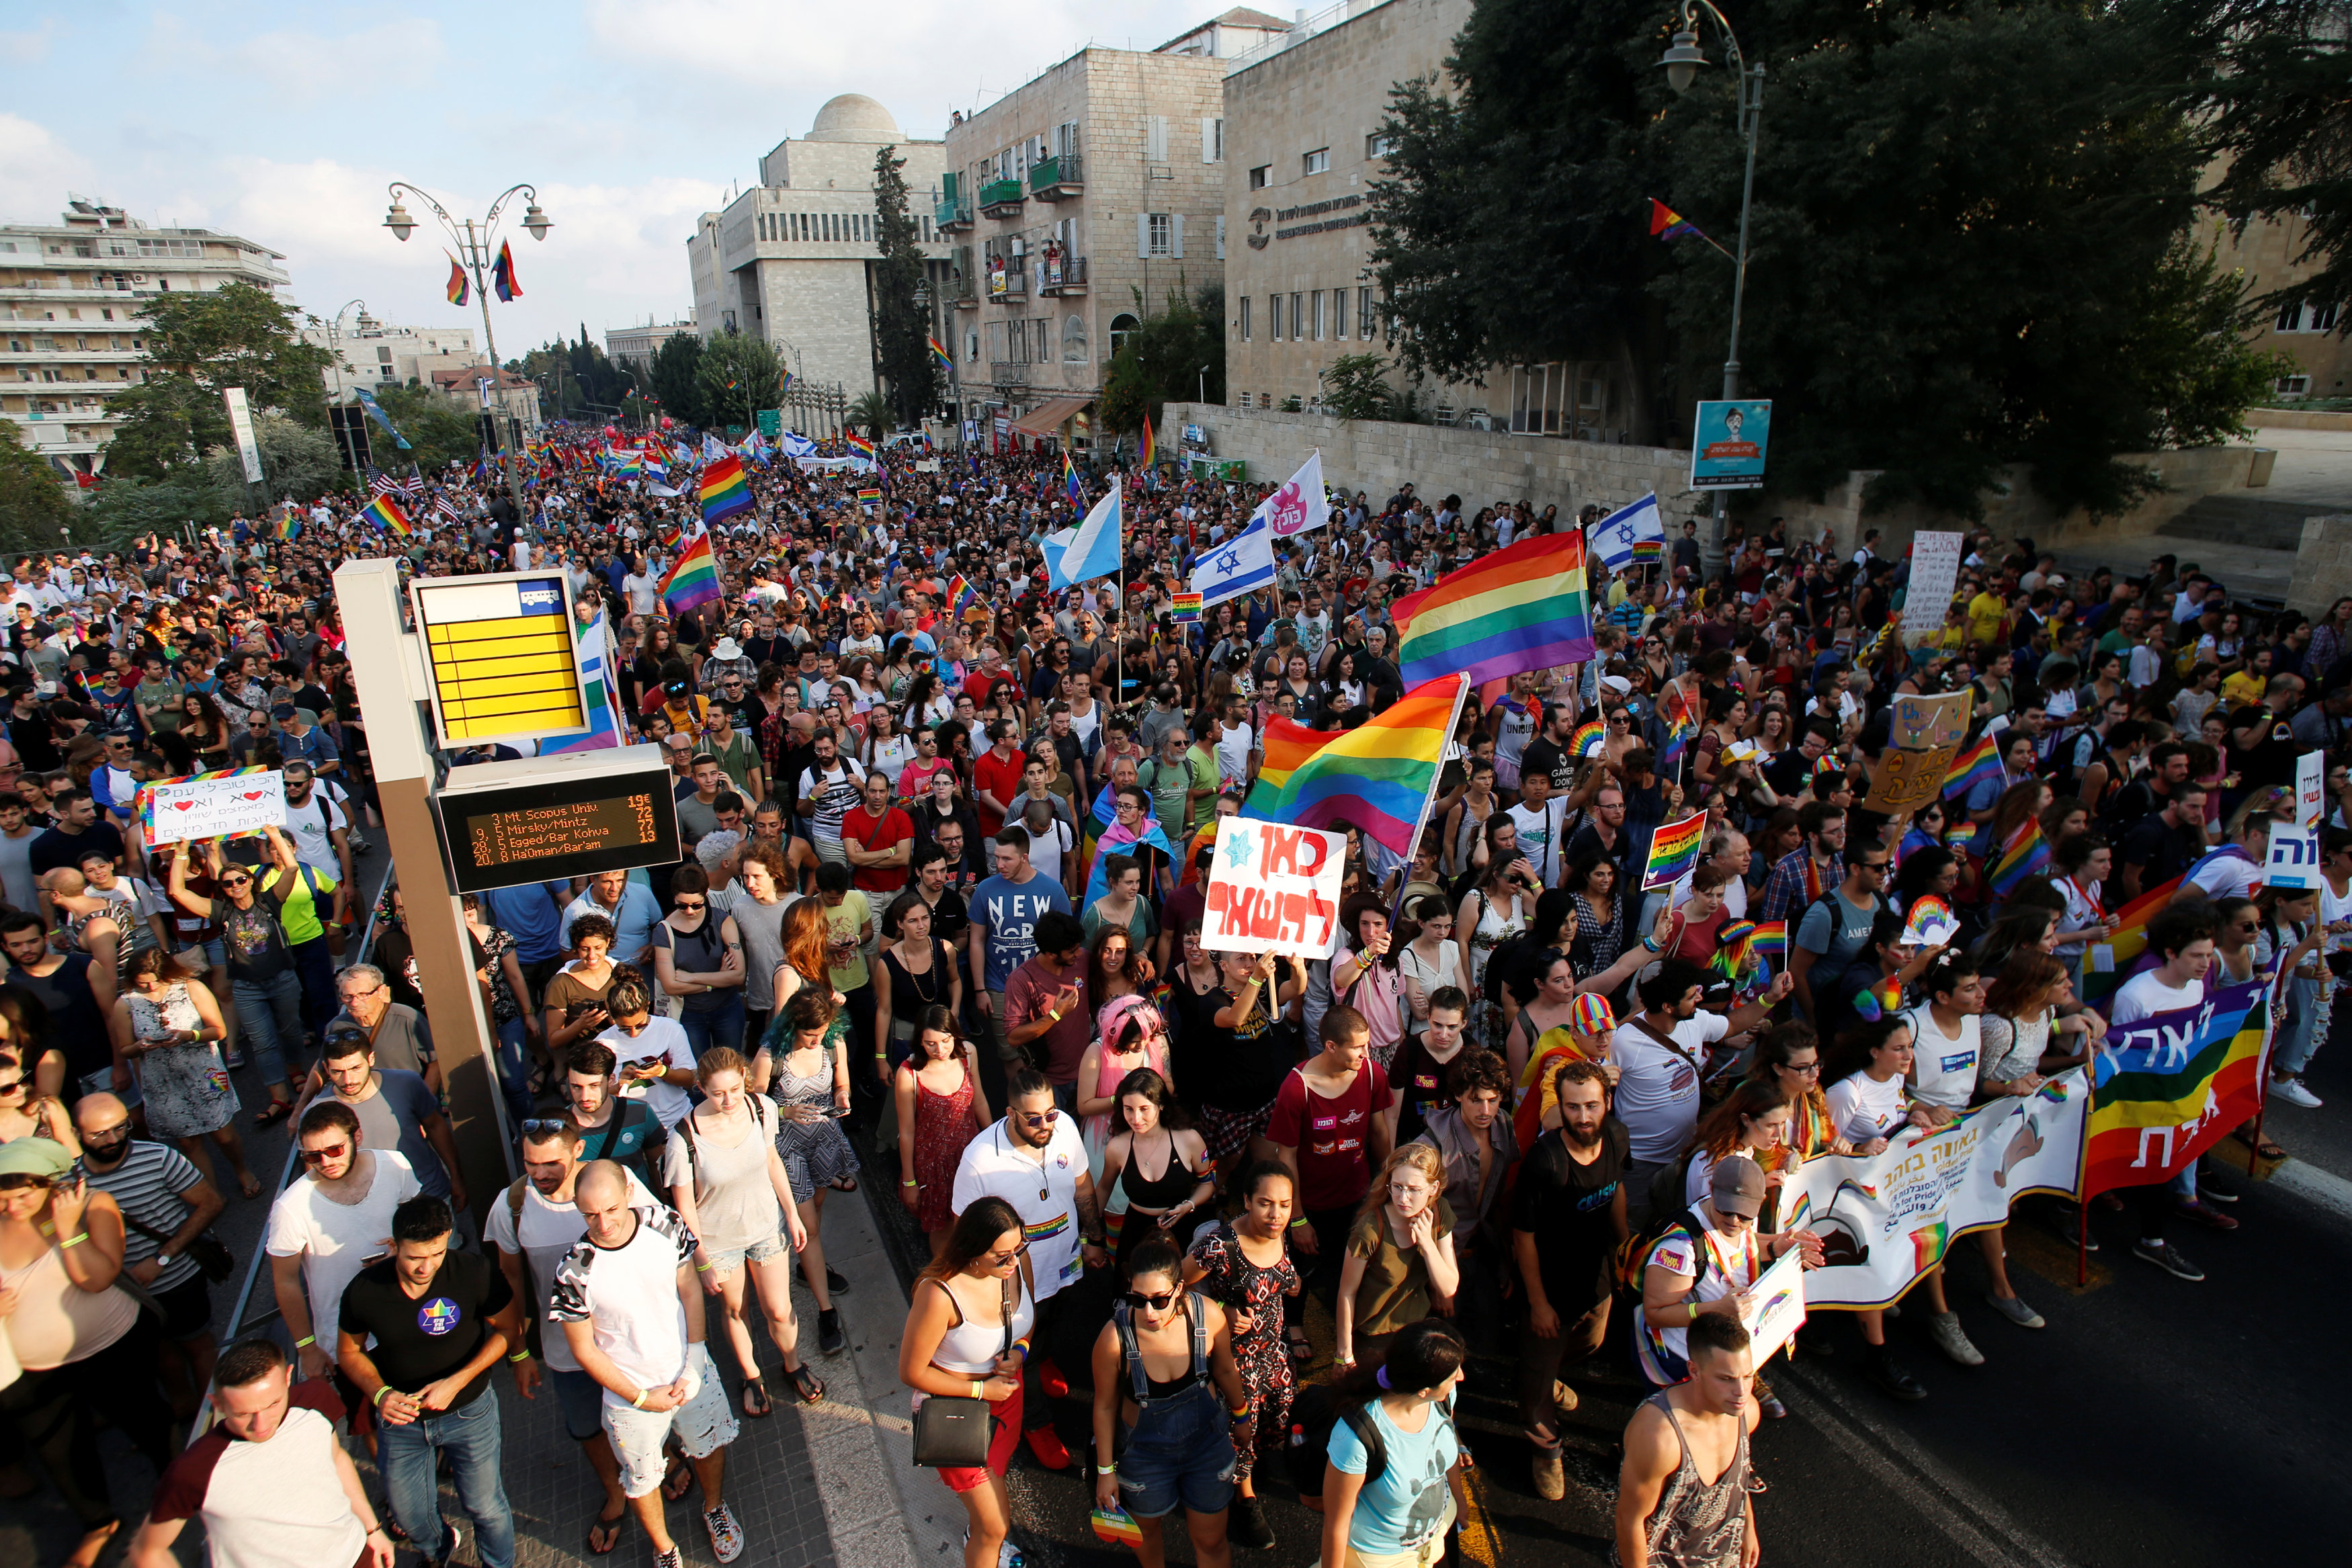 Jerusalem Gay Pride parade marches amid tight security